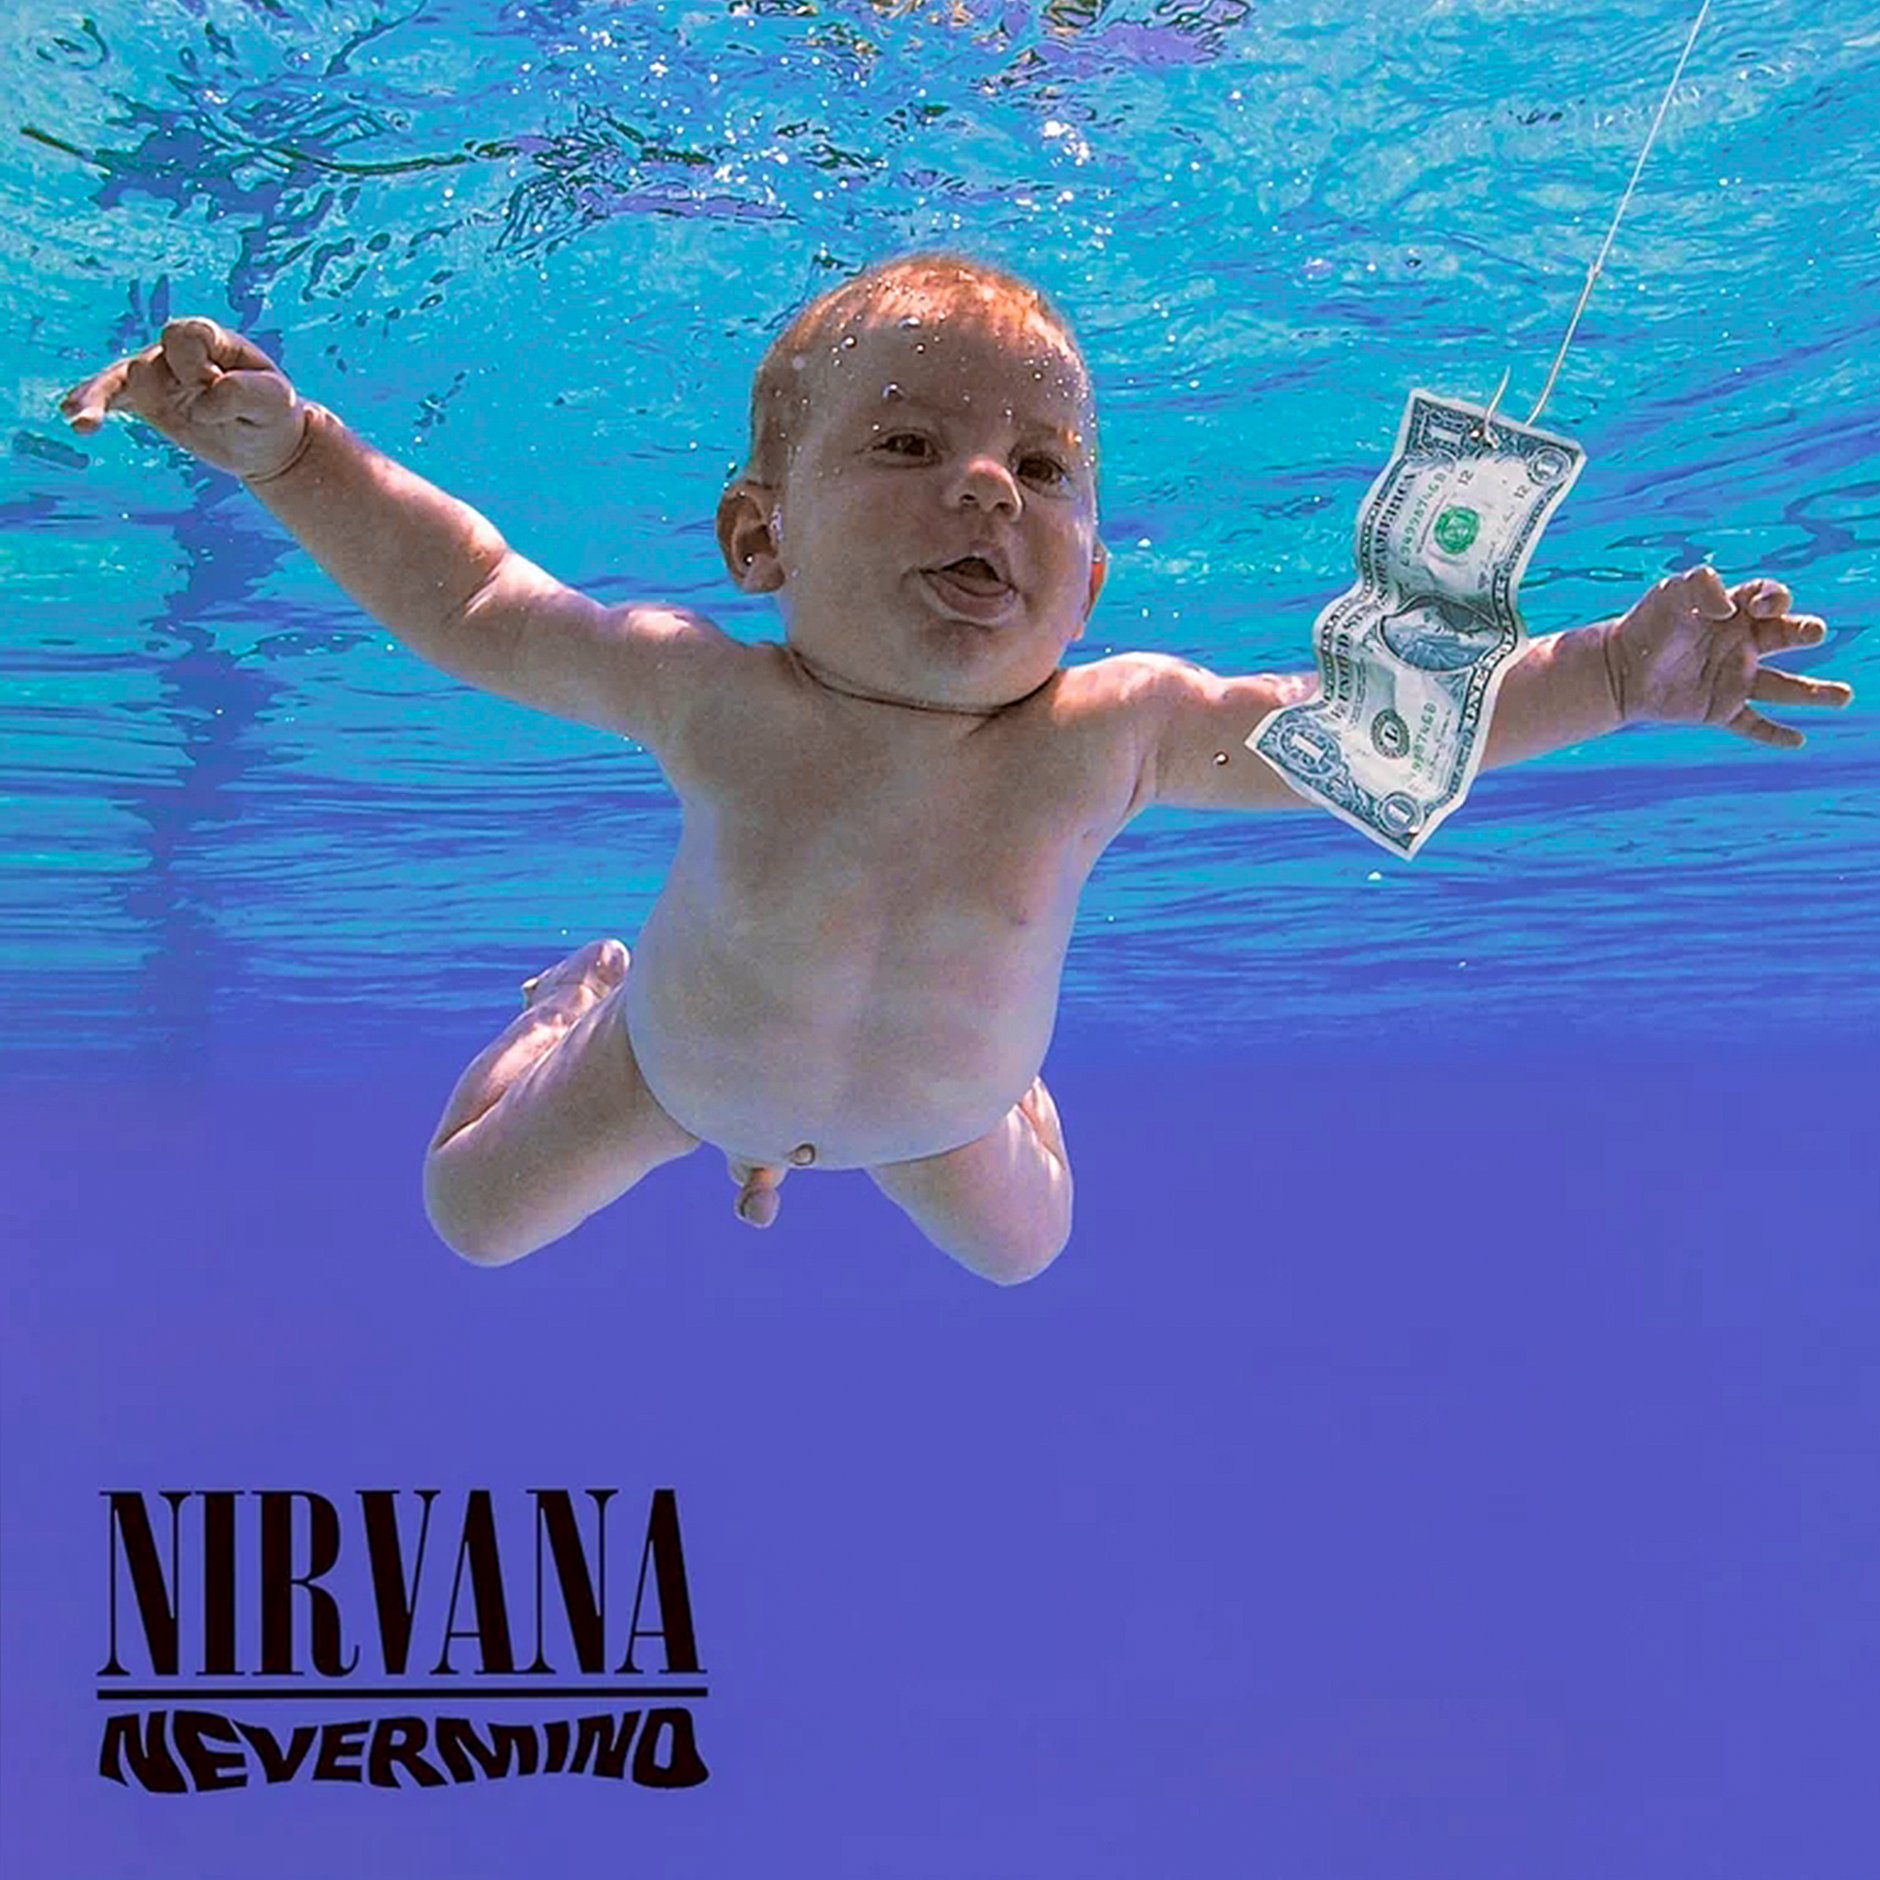 Nirvana pissing